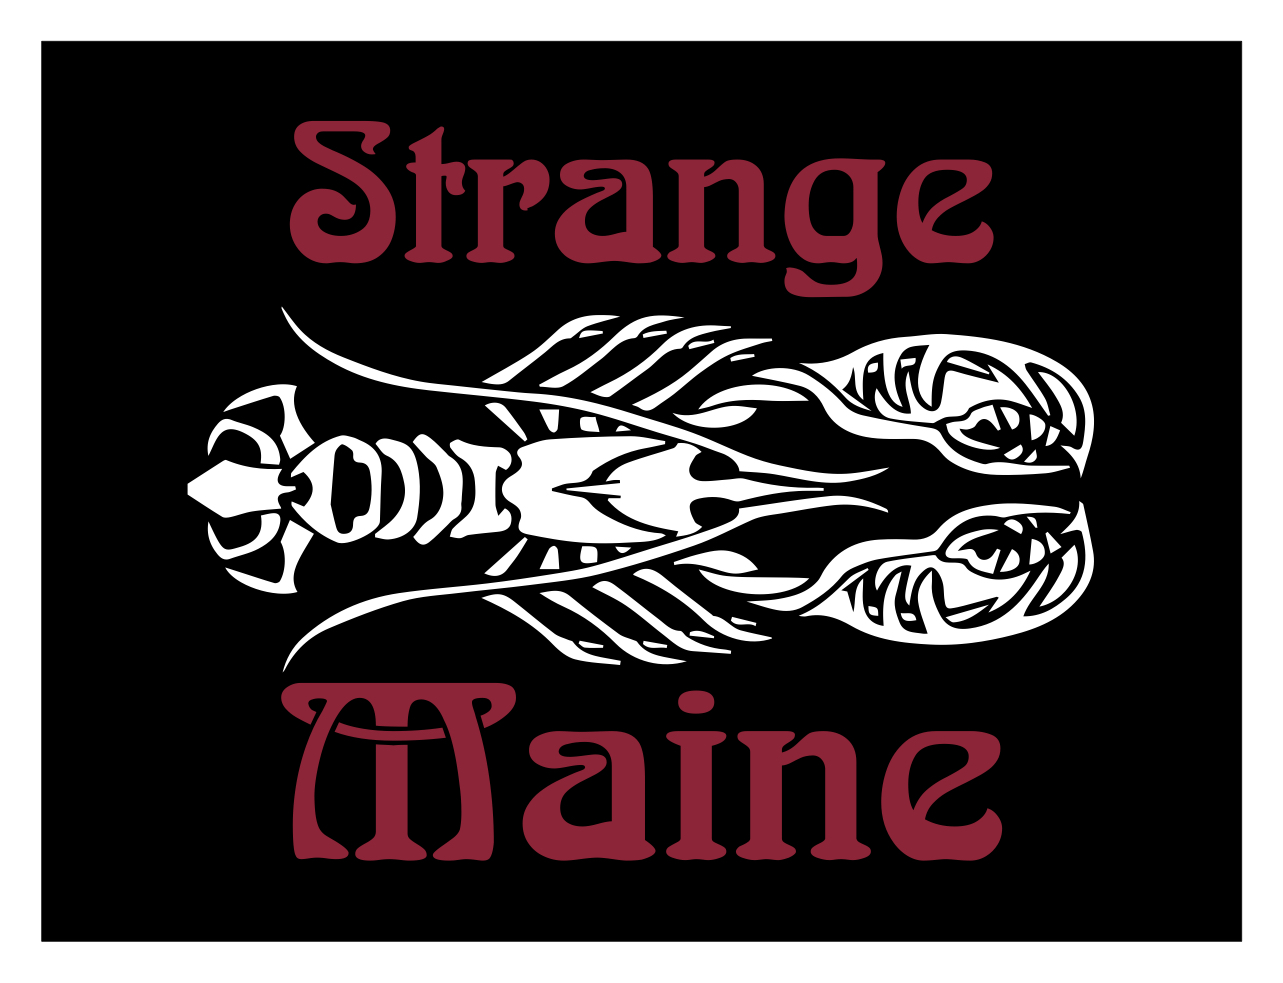 Strange Maine